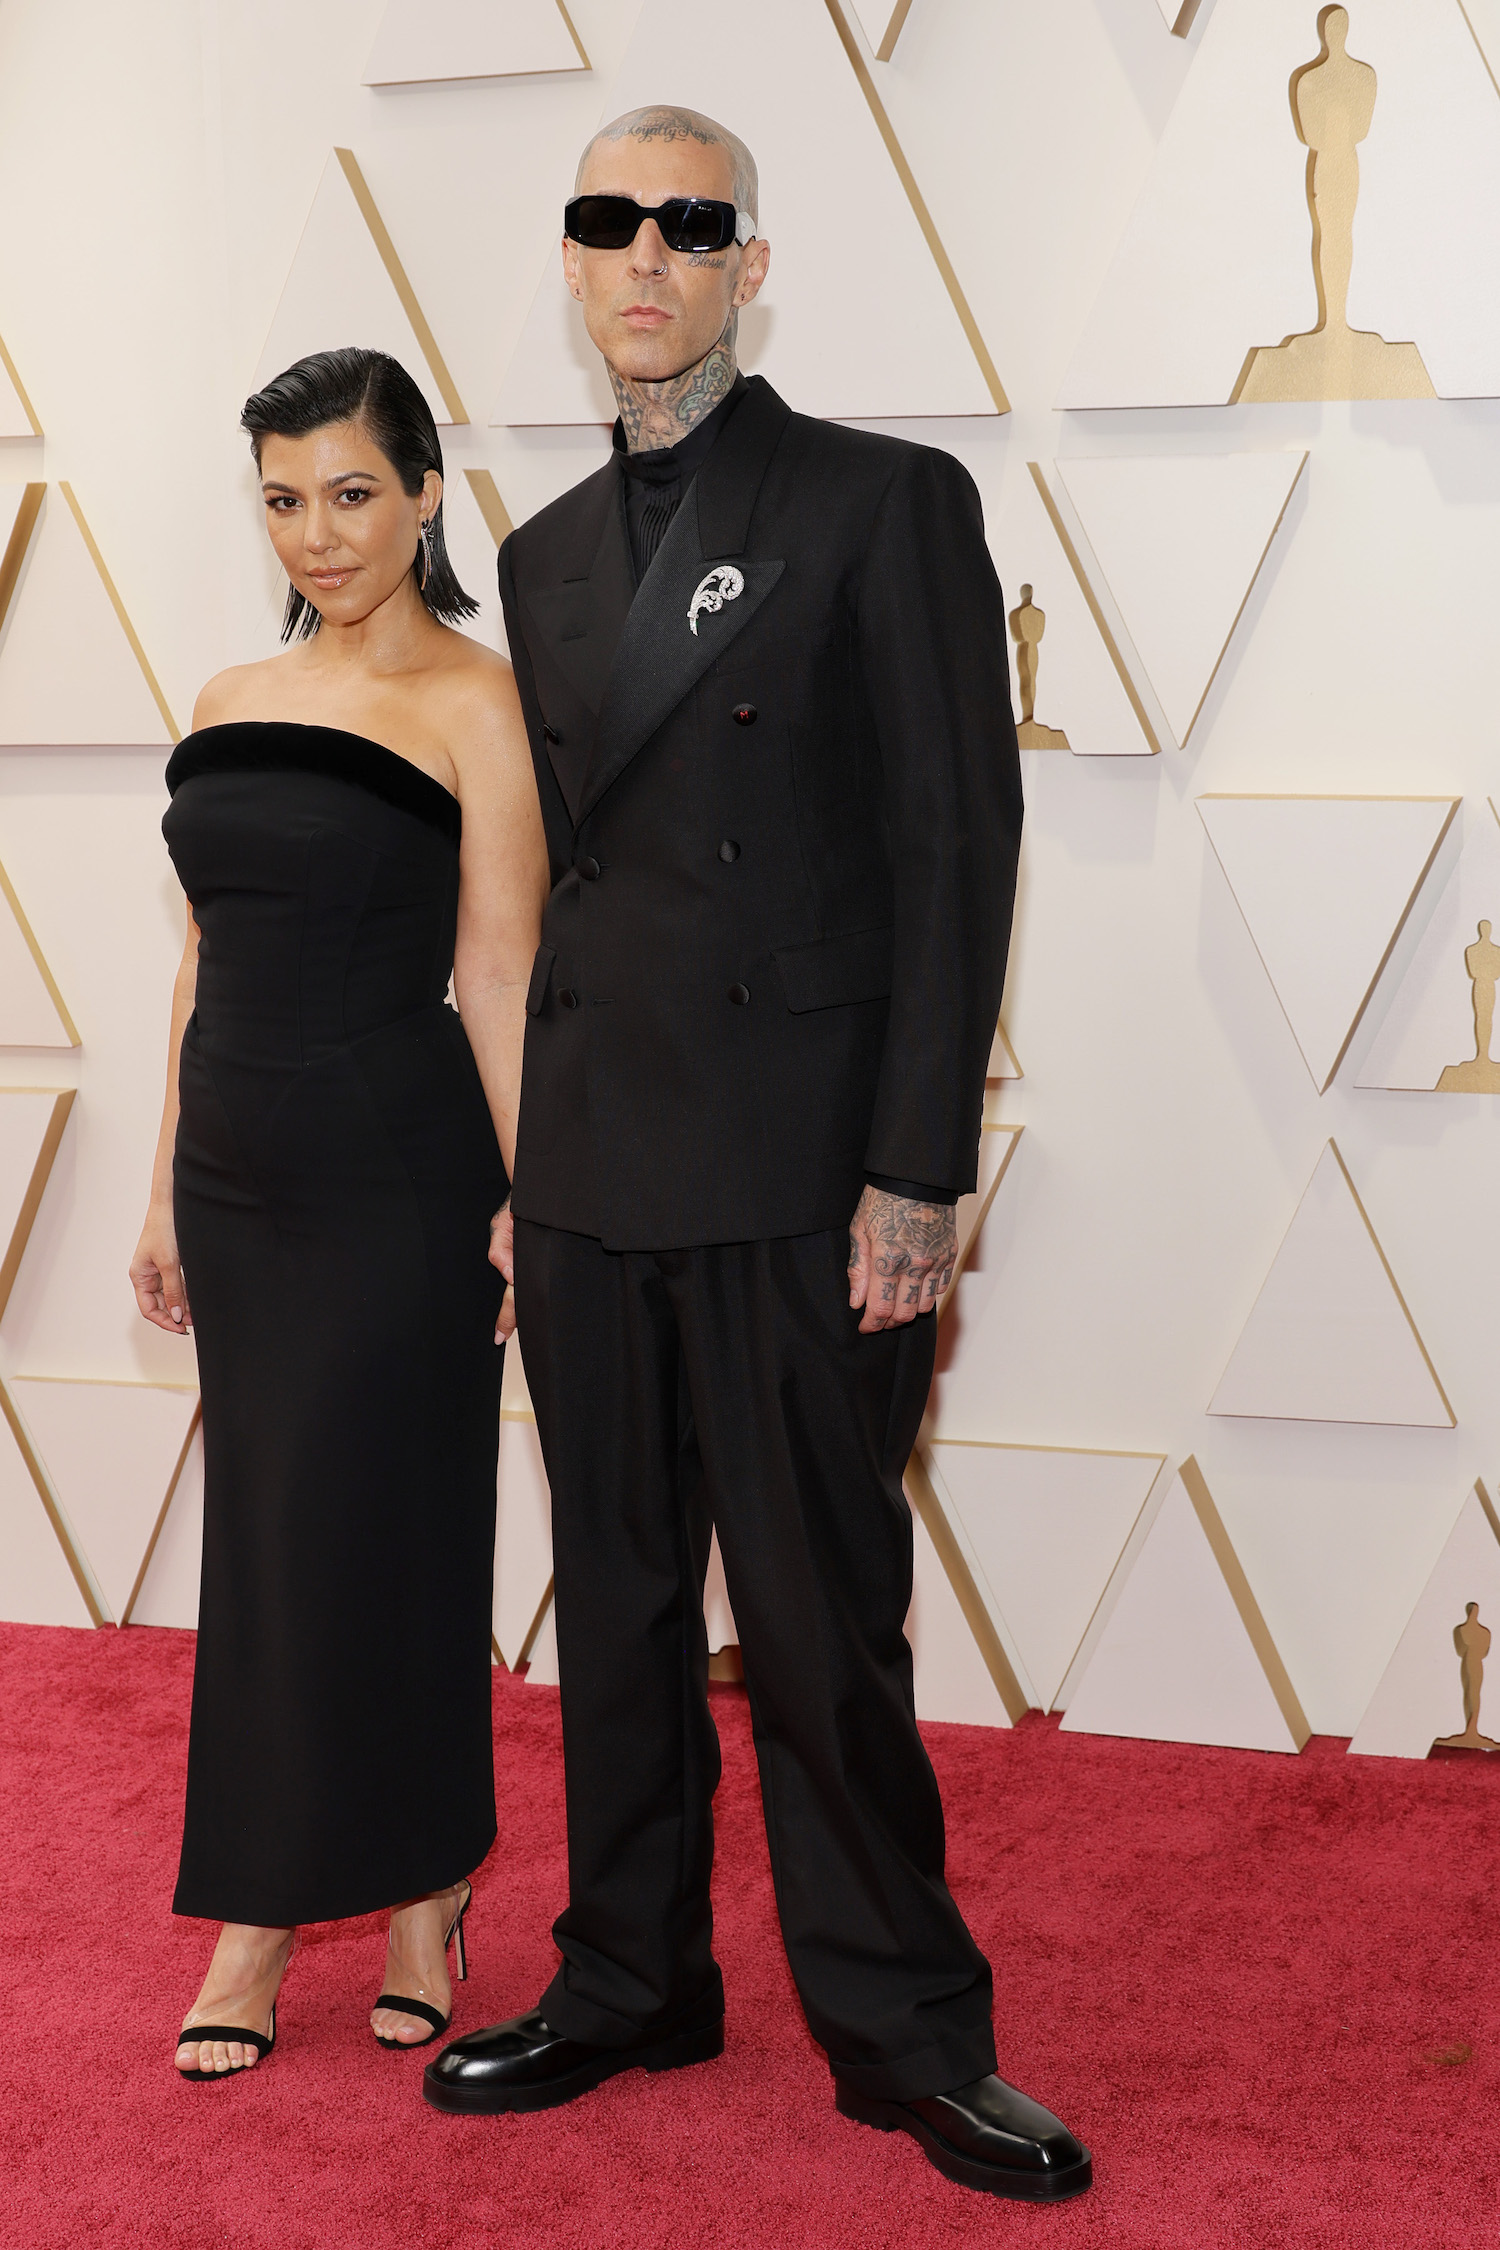 Kourtney Kardashian and Travis Barker at the Oscars 2022